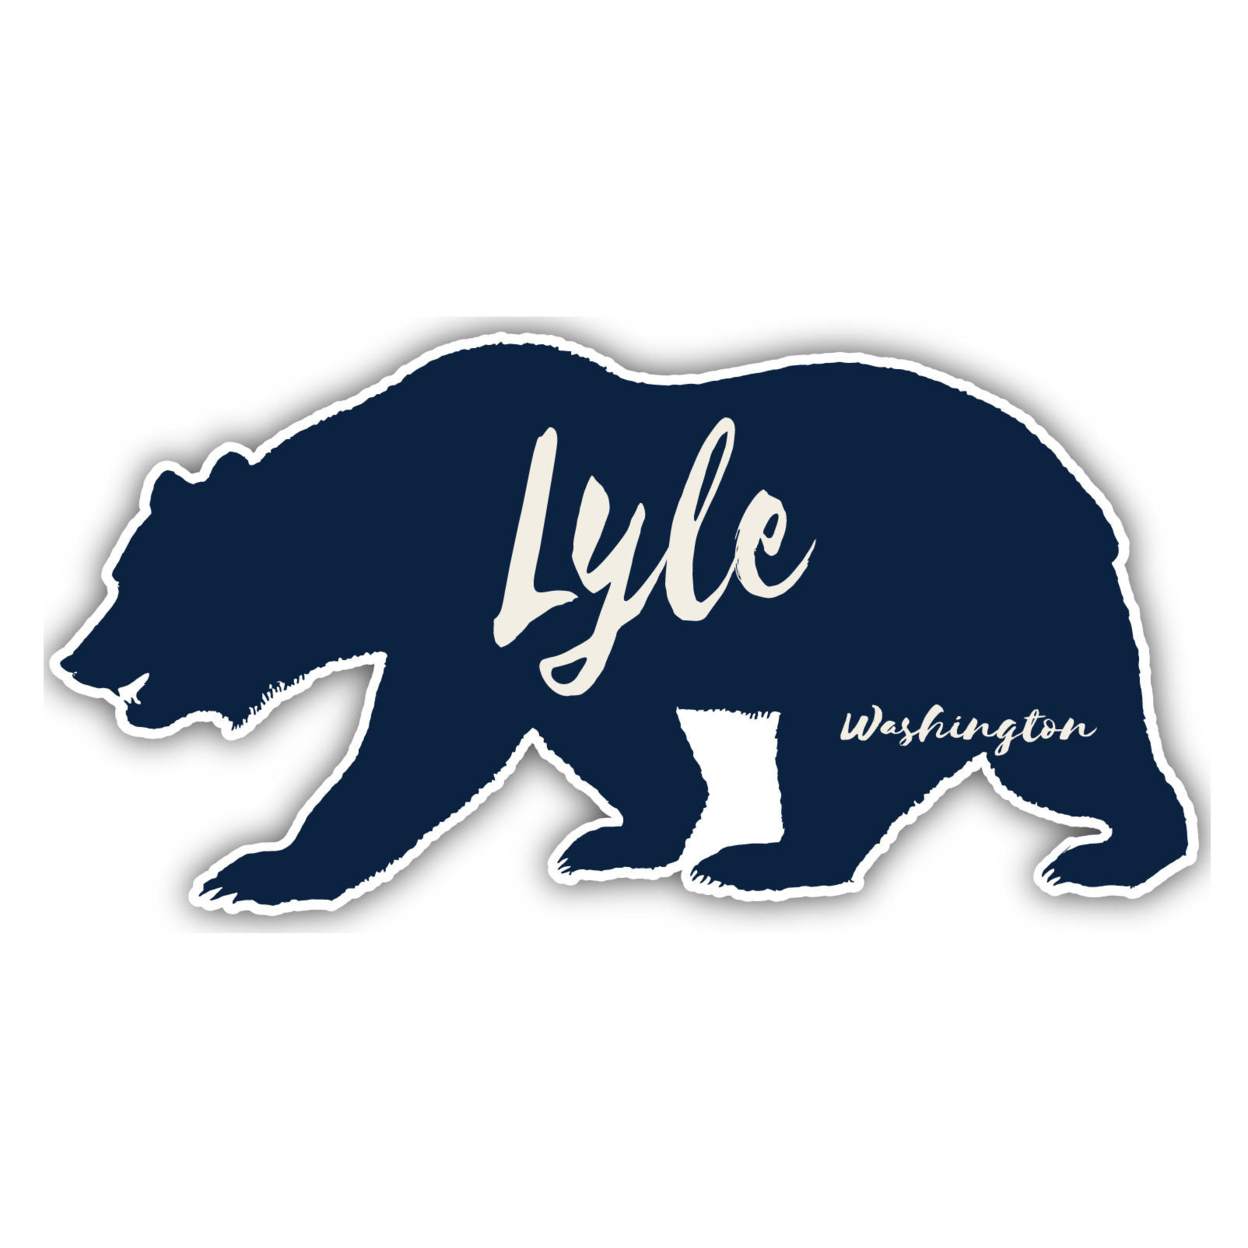 Lyle Washington Souvenir Decorative Stickers (Choose Theme And Size) - 2-Inch, Bear